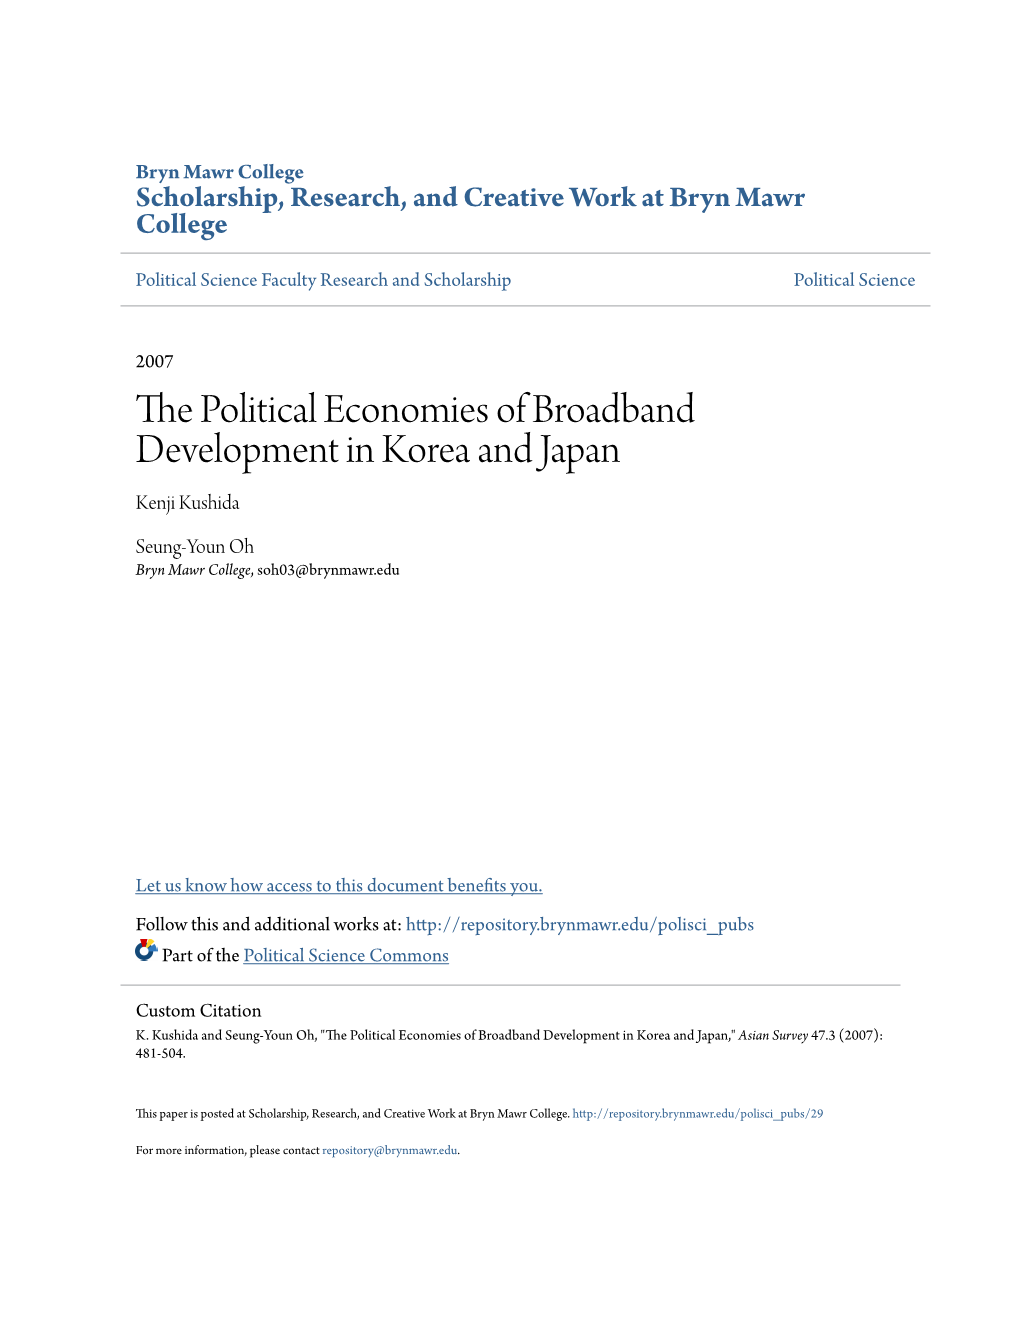 The Political Economies of Broadband Development in Korea and Japan Author(S): Kenji Kushida and Seung-Youn Oh Source: Asian Survey, Vol